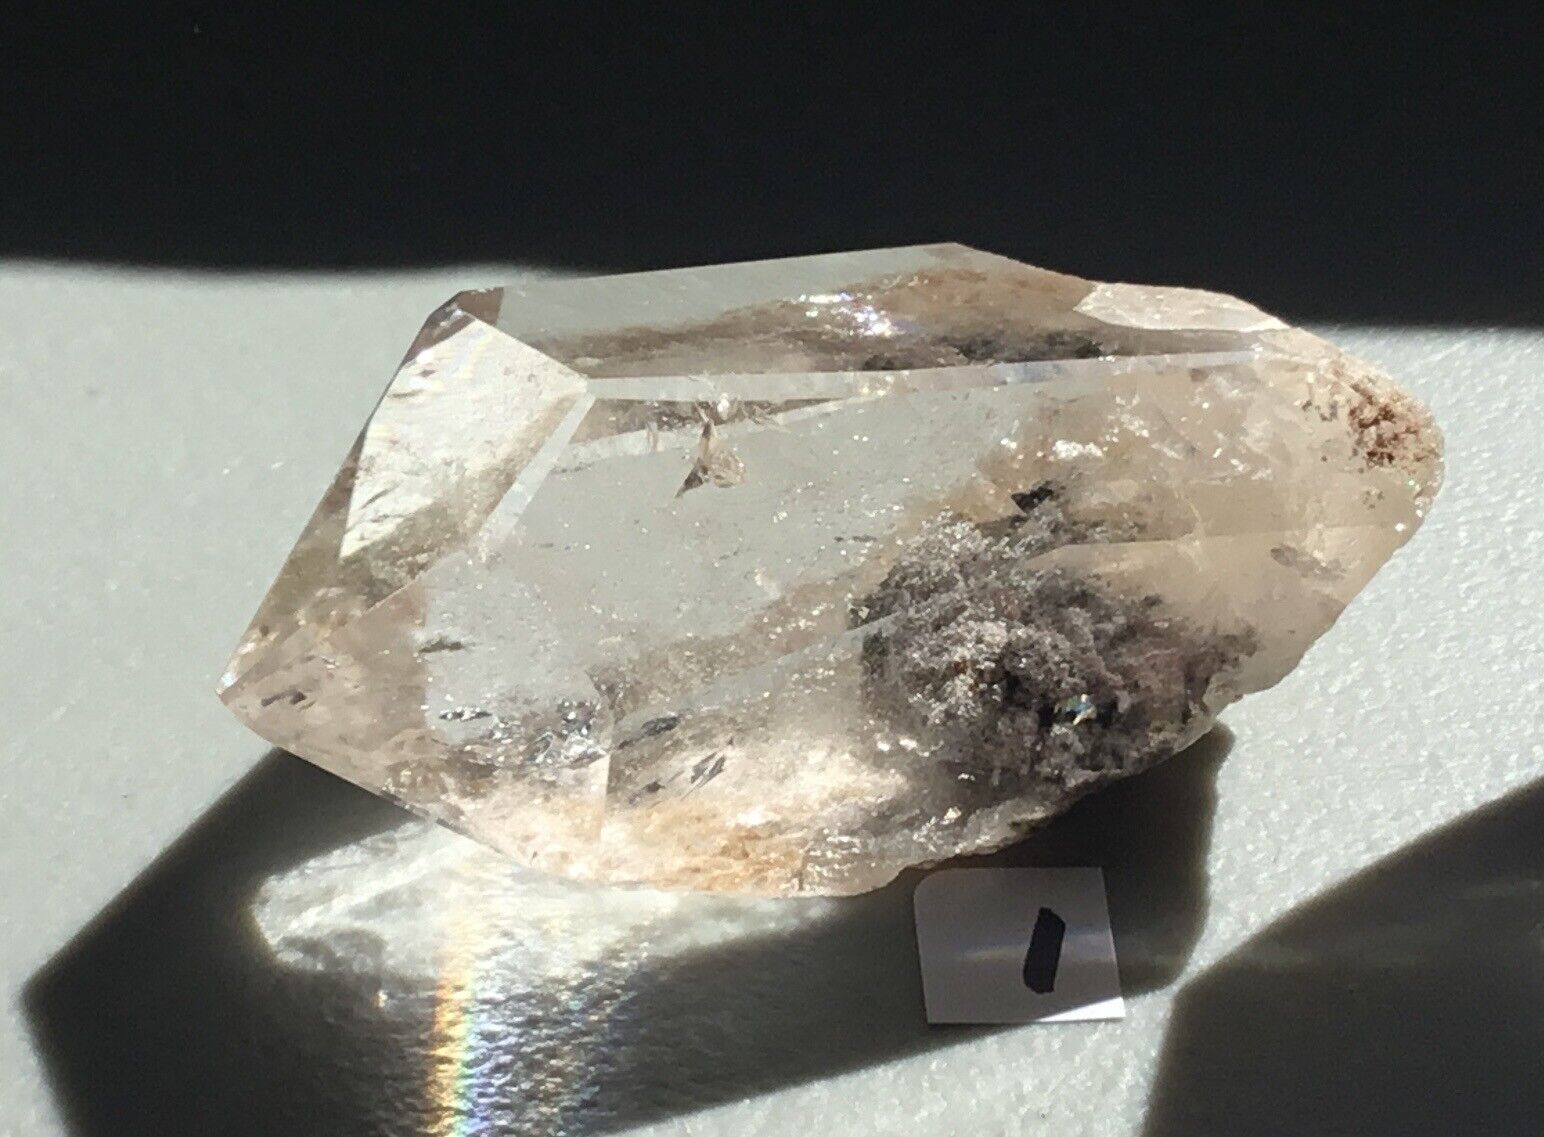 Garden Quartz Crystal Freeform Lodolite,Metaphysical,Reiki,Unique Gift,Specimen